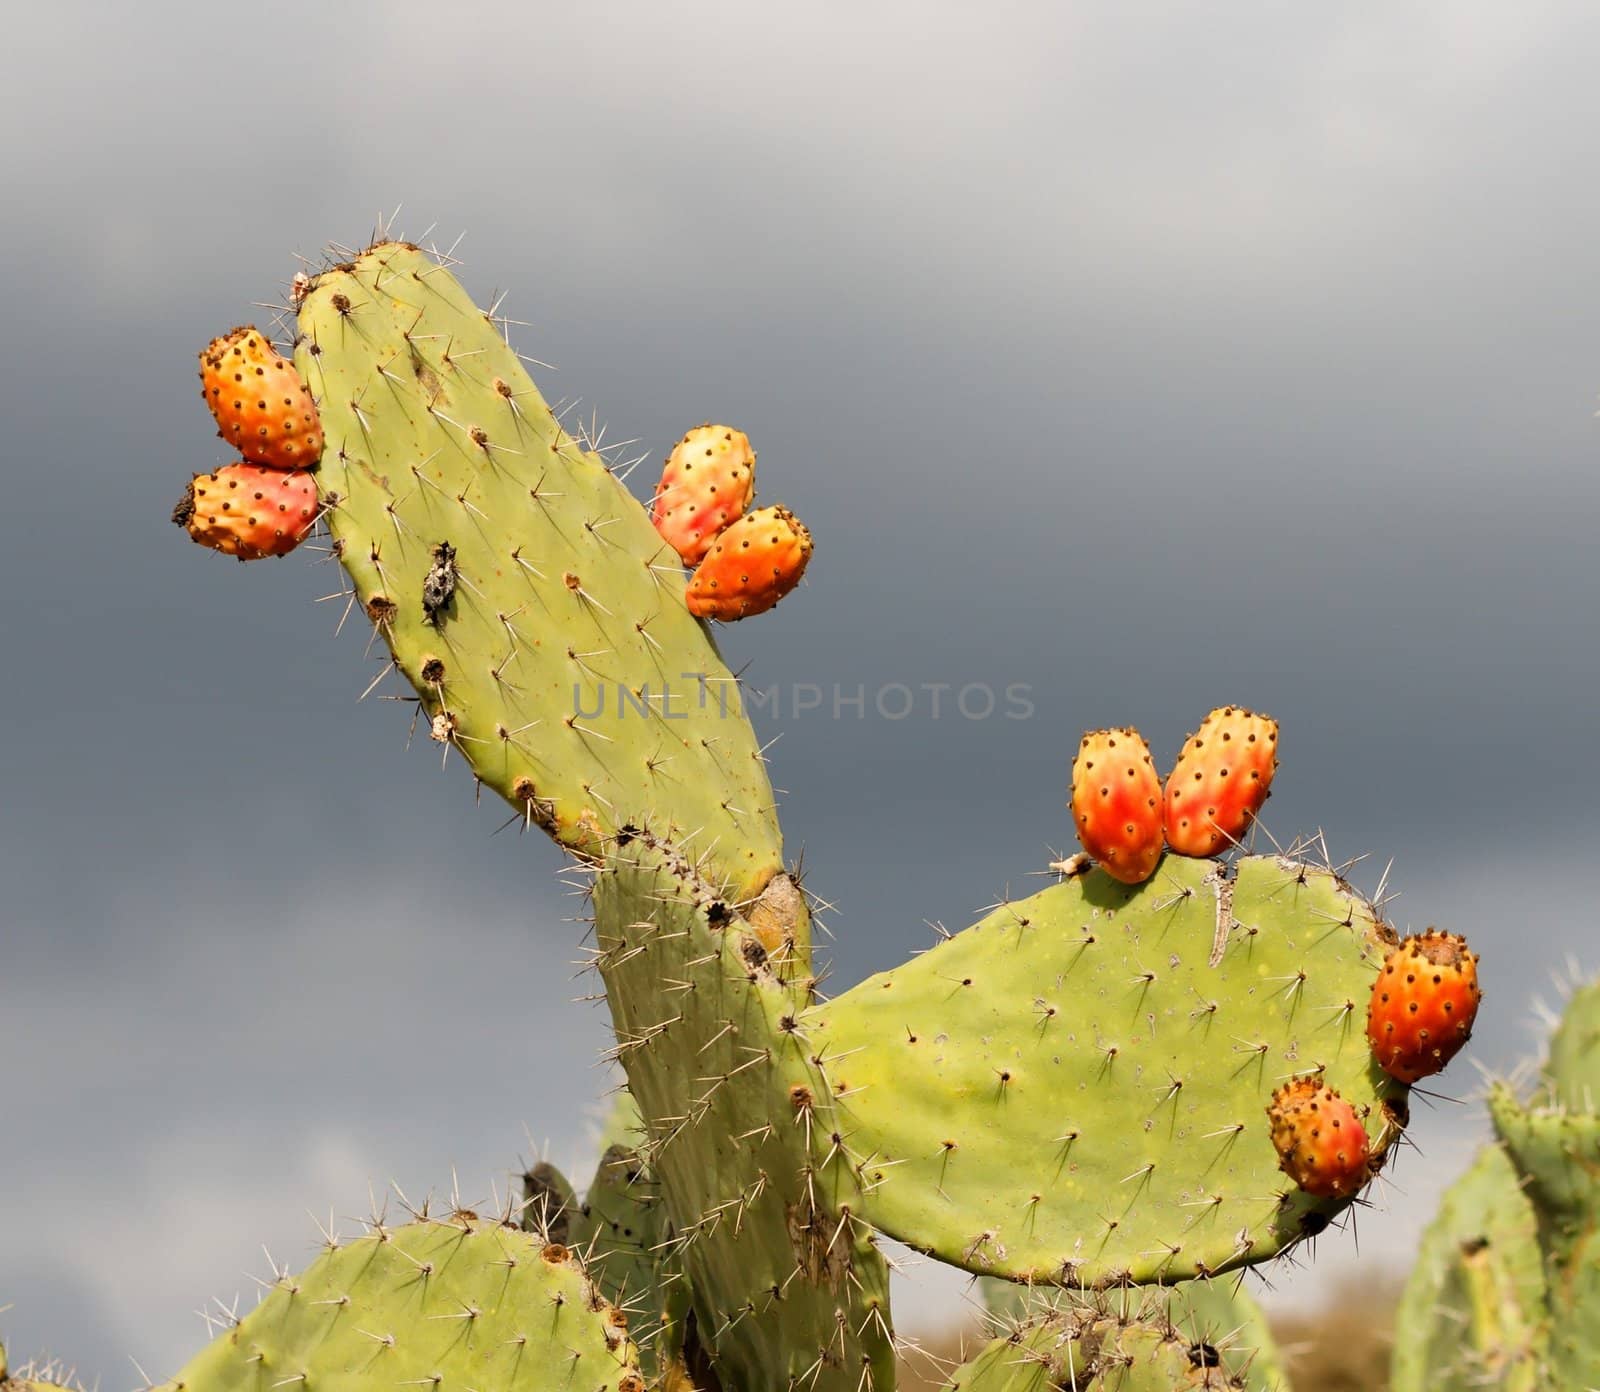 Fruits of tzabar cactus, or prickly pear (Opuntia ficus Indica)